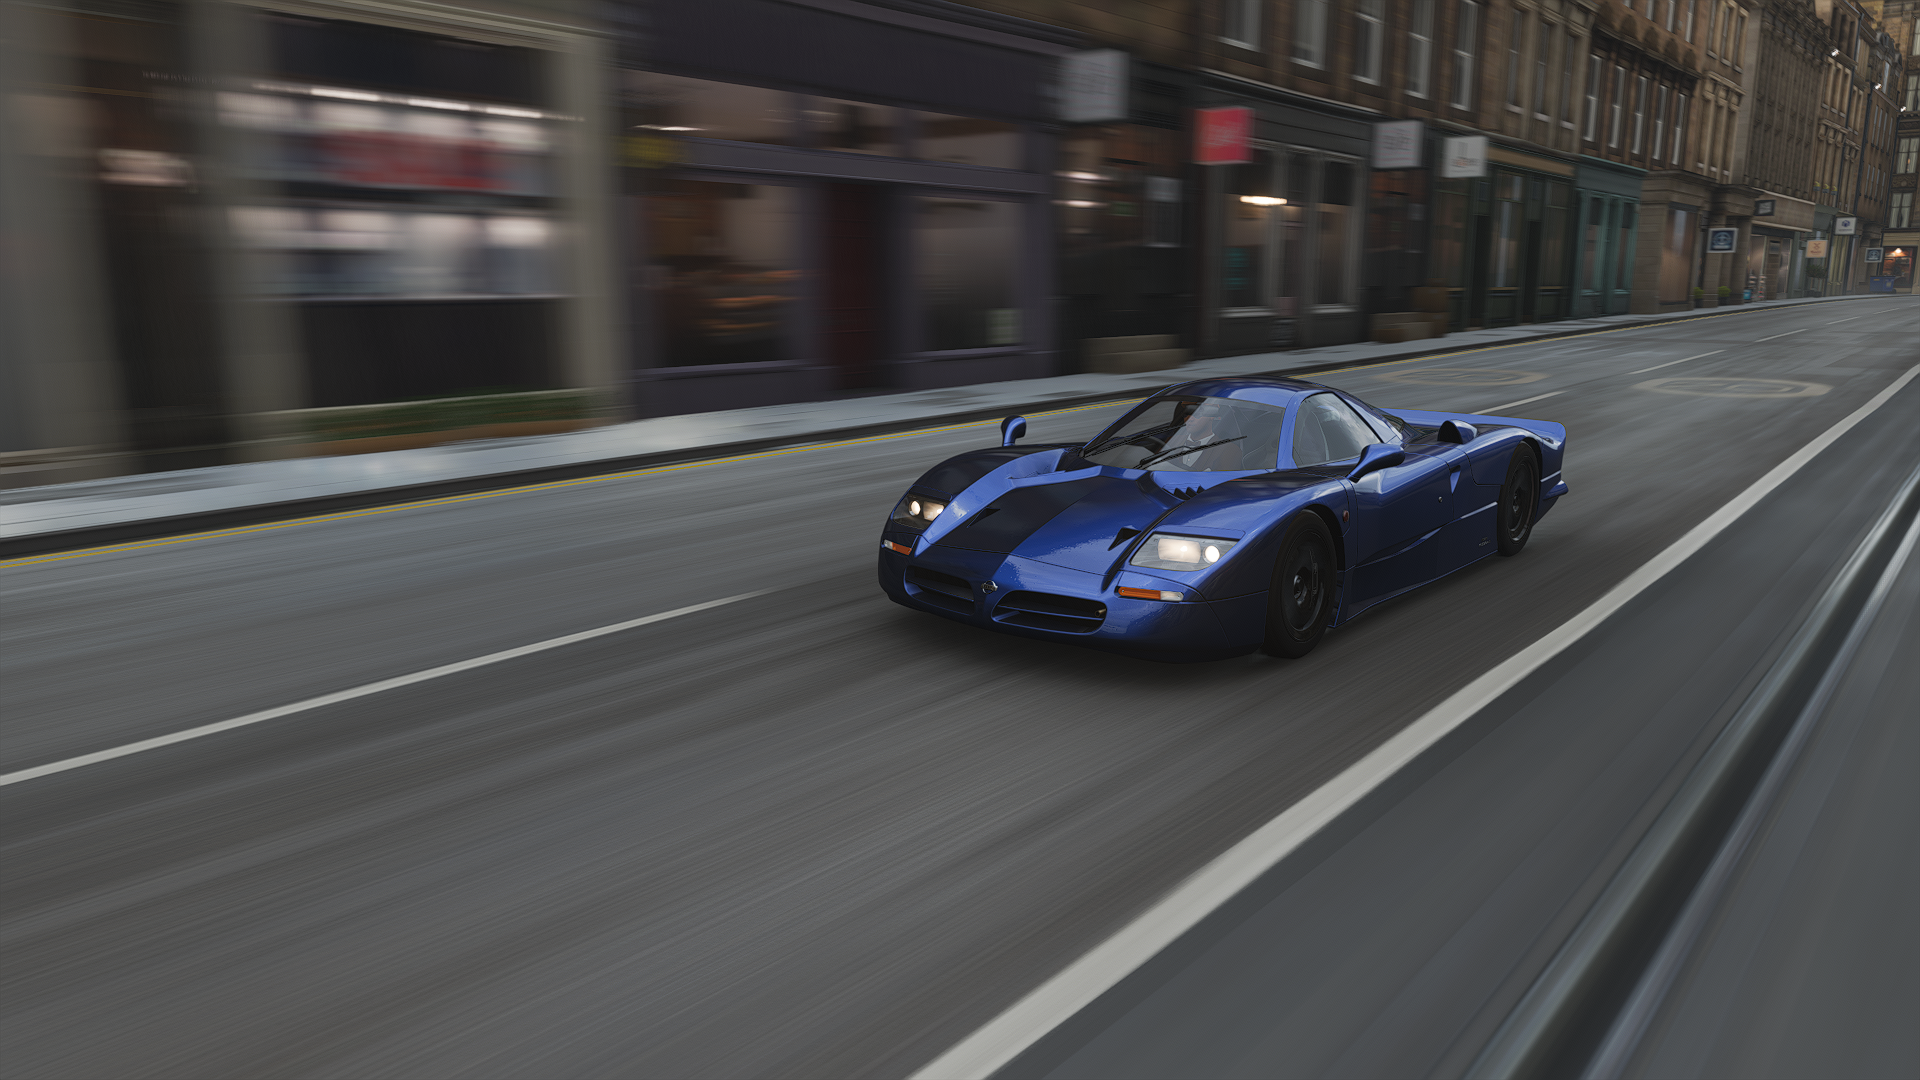 Forza Forza Horizon Forza Horizon 4 Nissan R390 GT1 Racing Car Video Games CGi Road Headlights Blurr 1920x1080